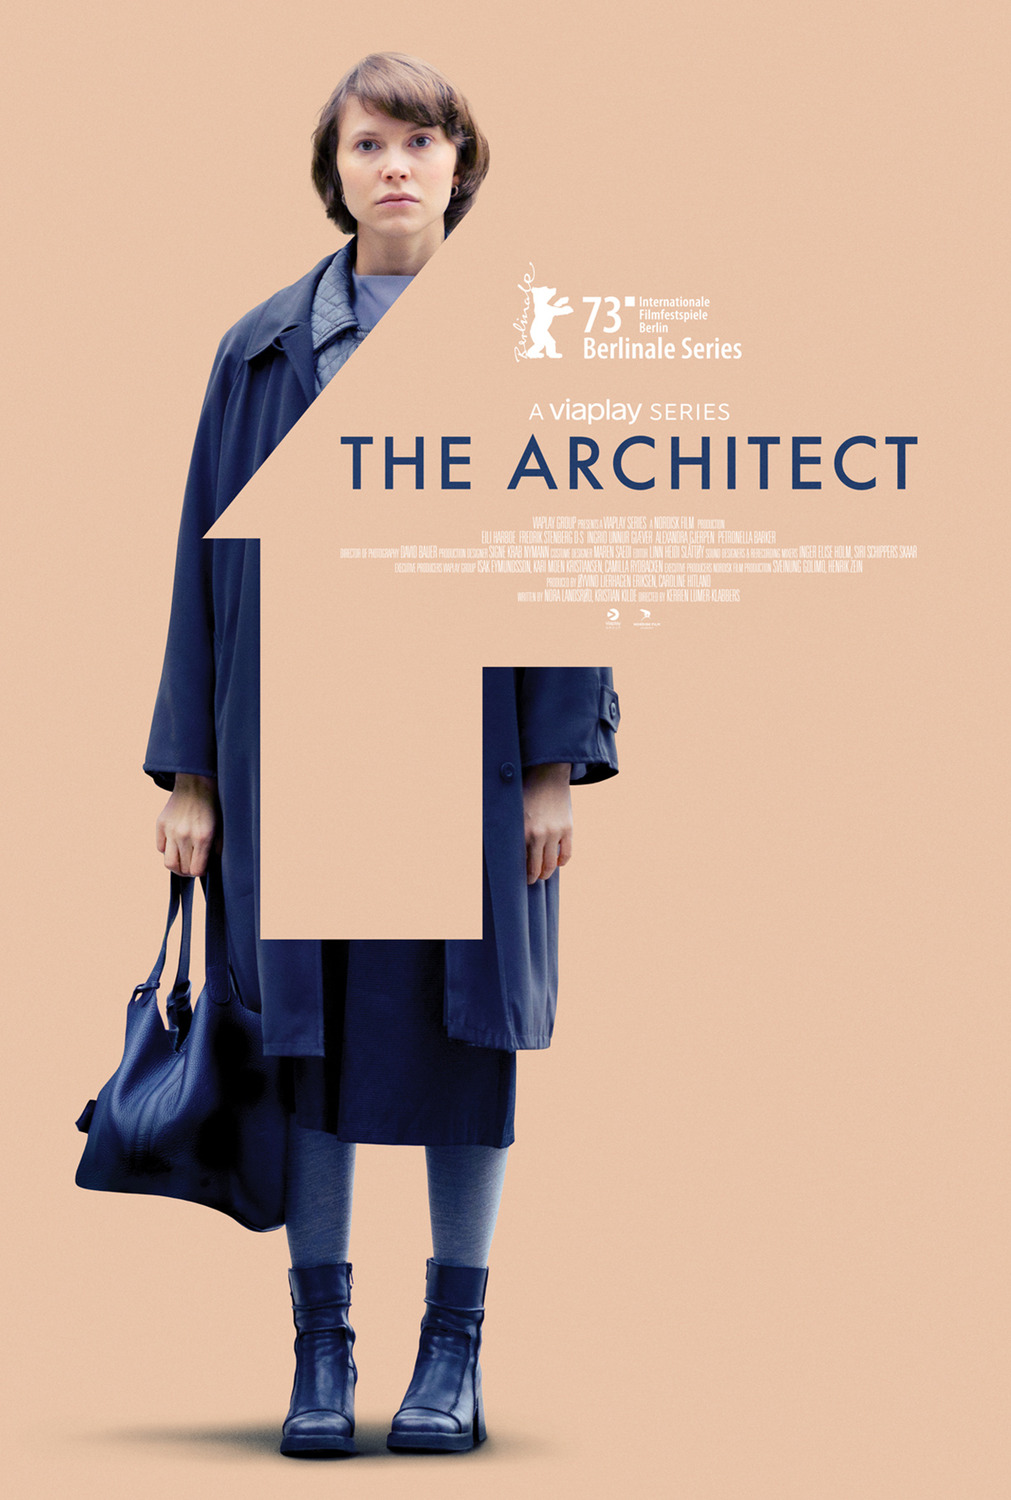 Extra Large TV Poster Image for Arkitekten 